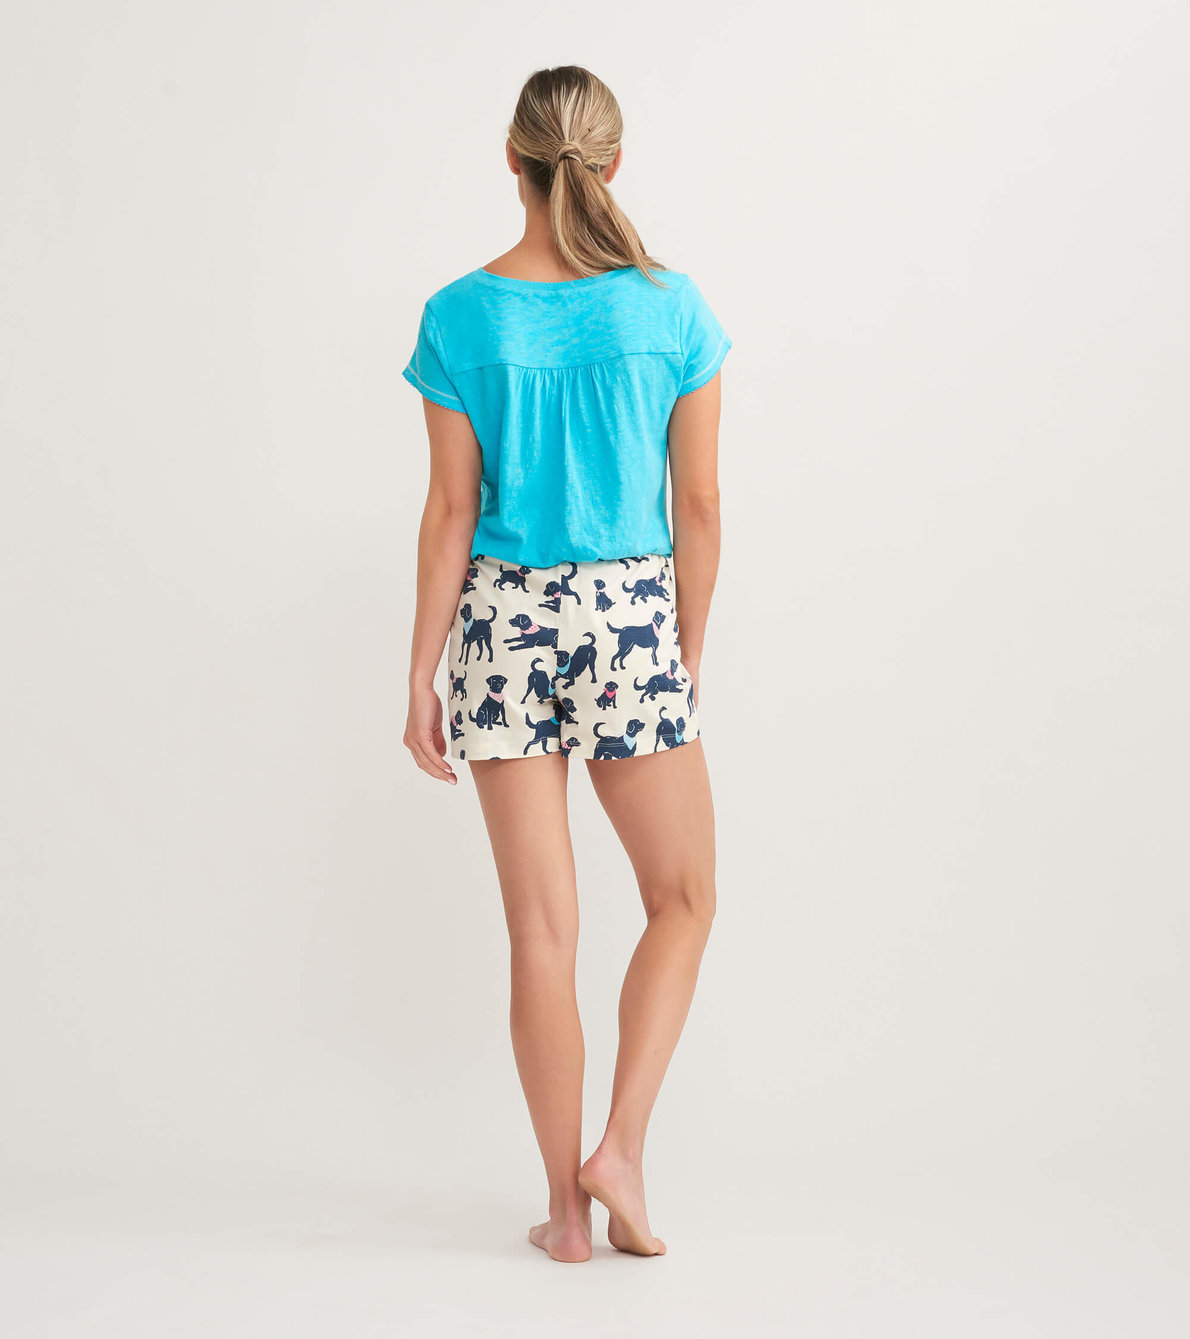 View larger image of Bandana Labs Women's Tee and Shorts Pajama Separates